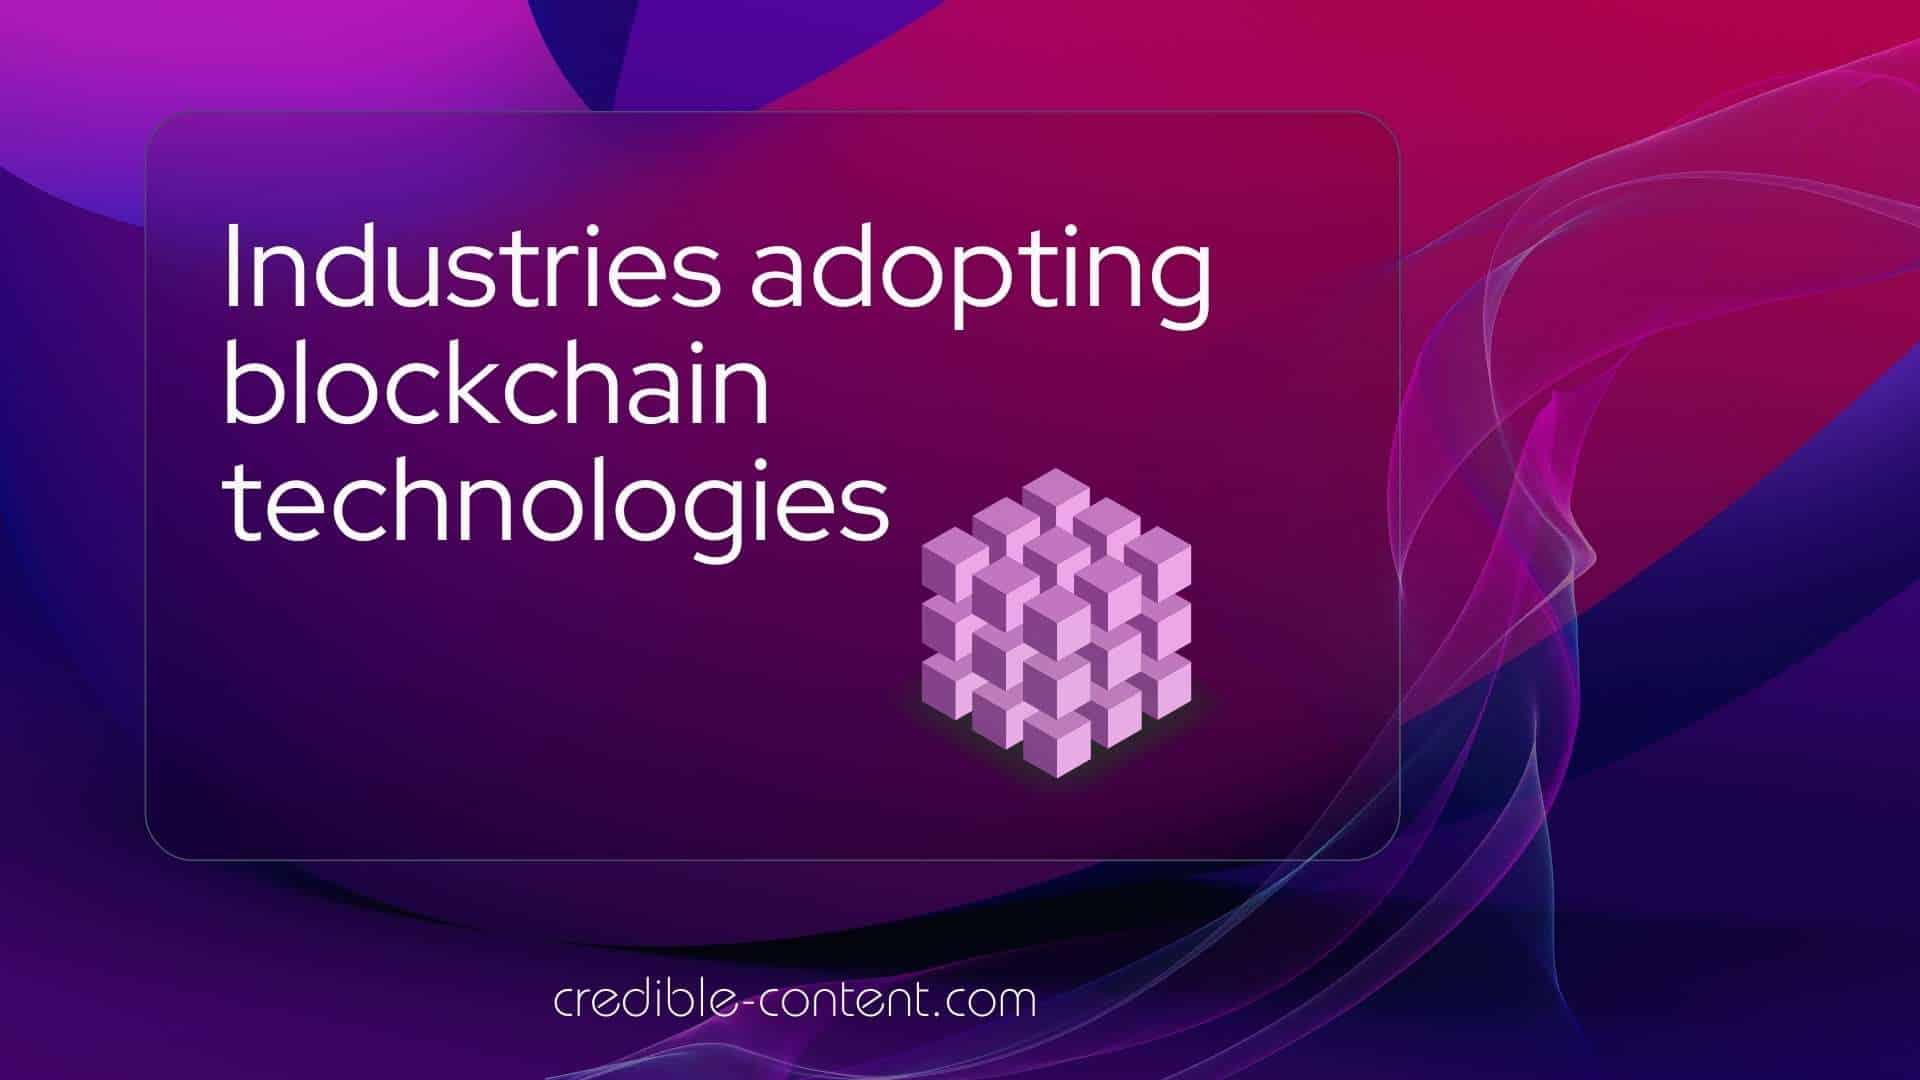 Industries adopting blockchain technologies